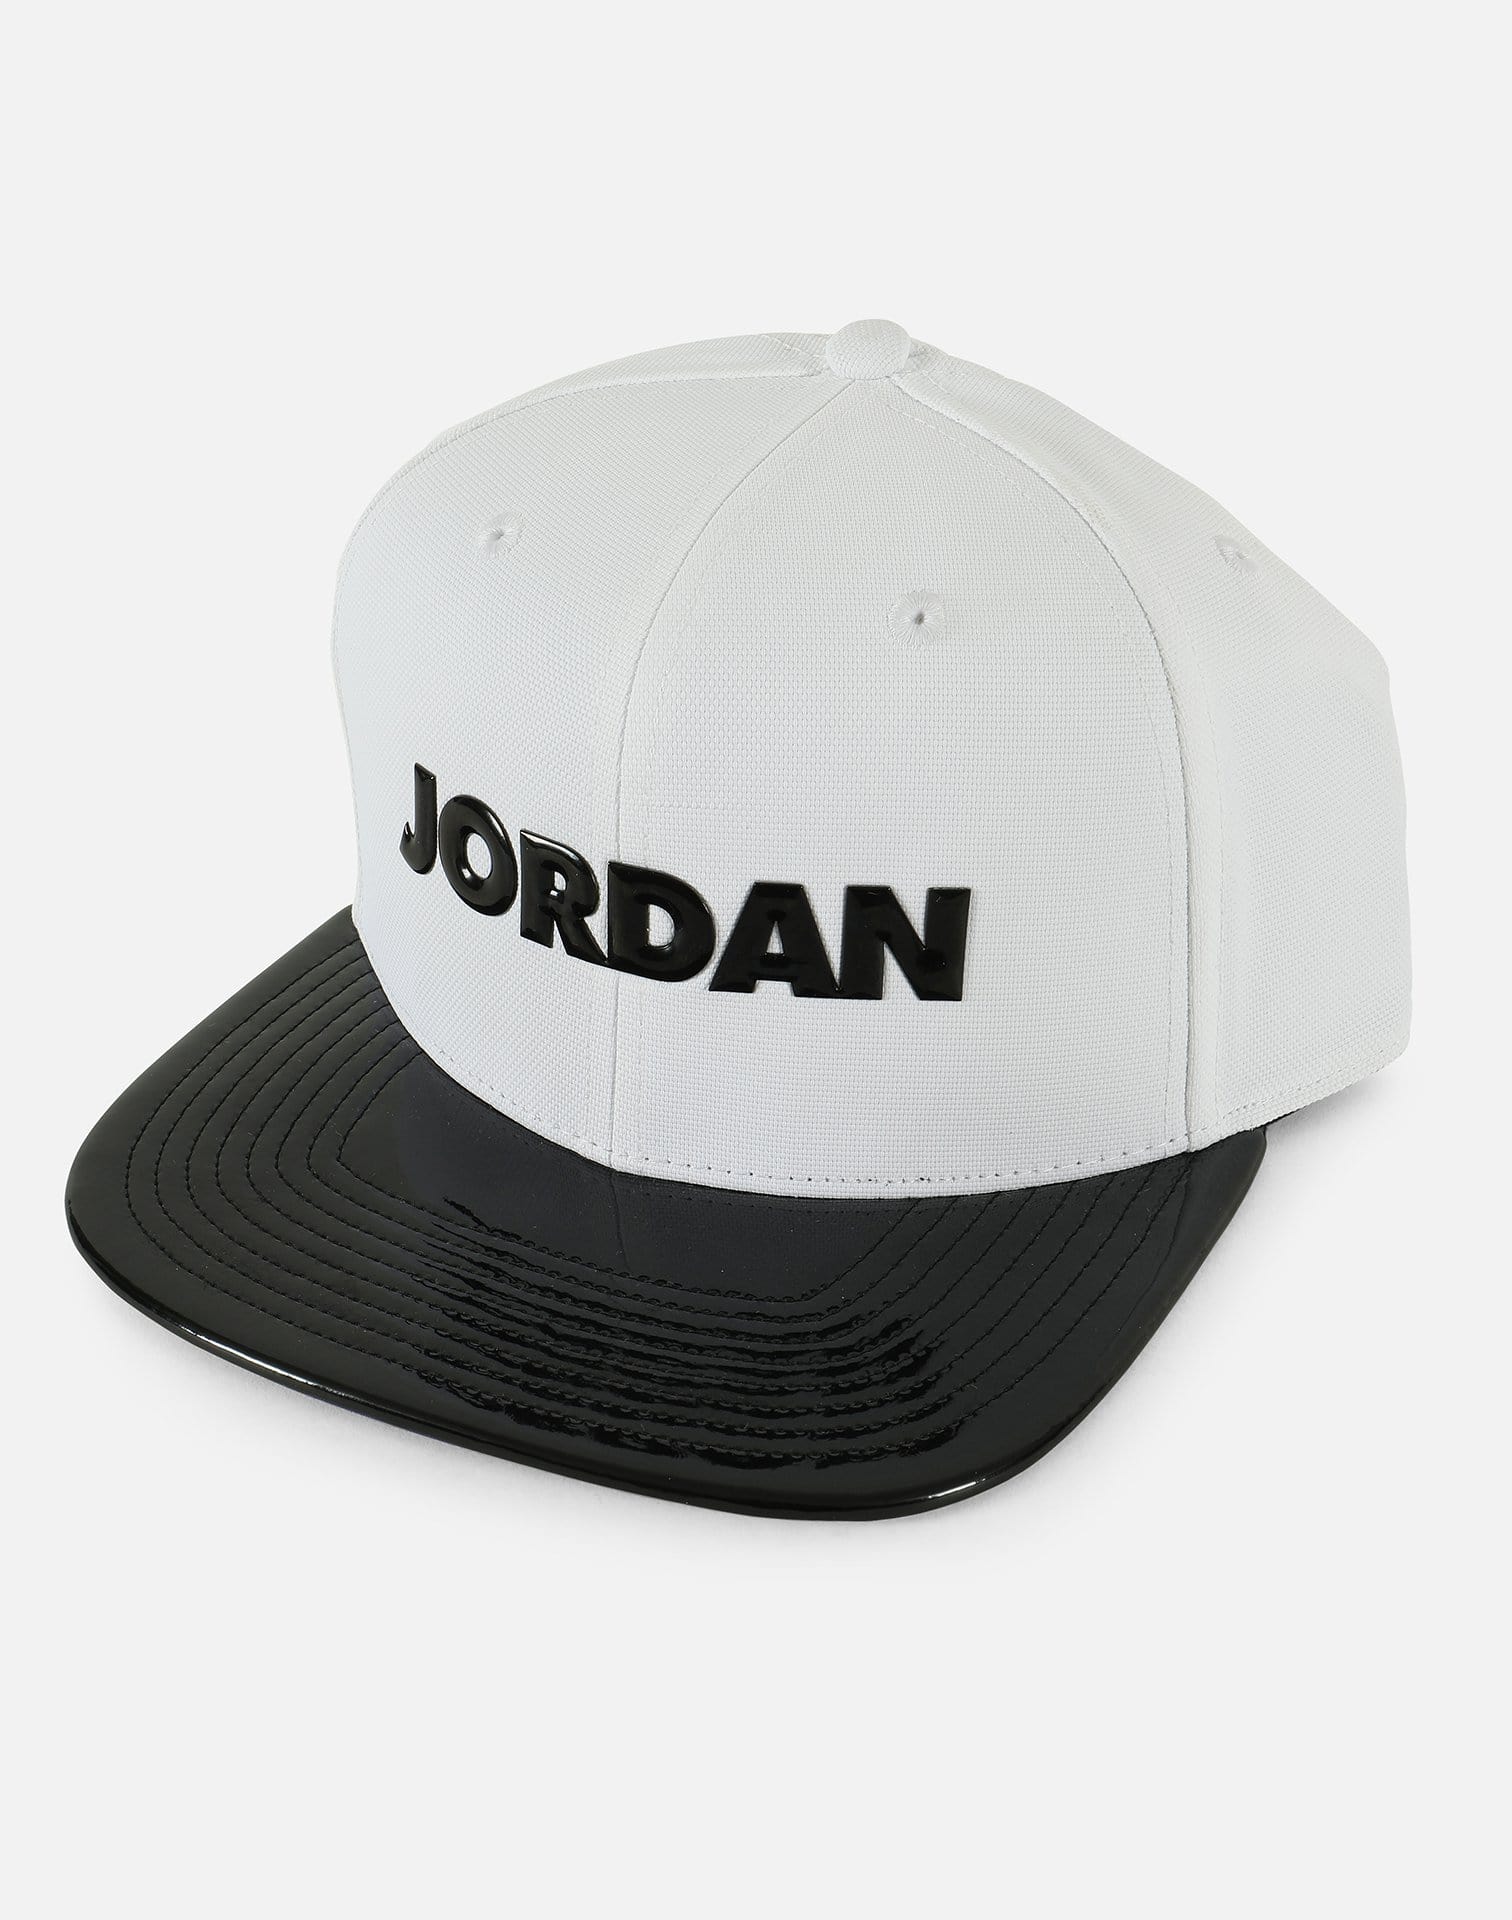 Jordan AJ Pro 11 Snapback Hat